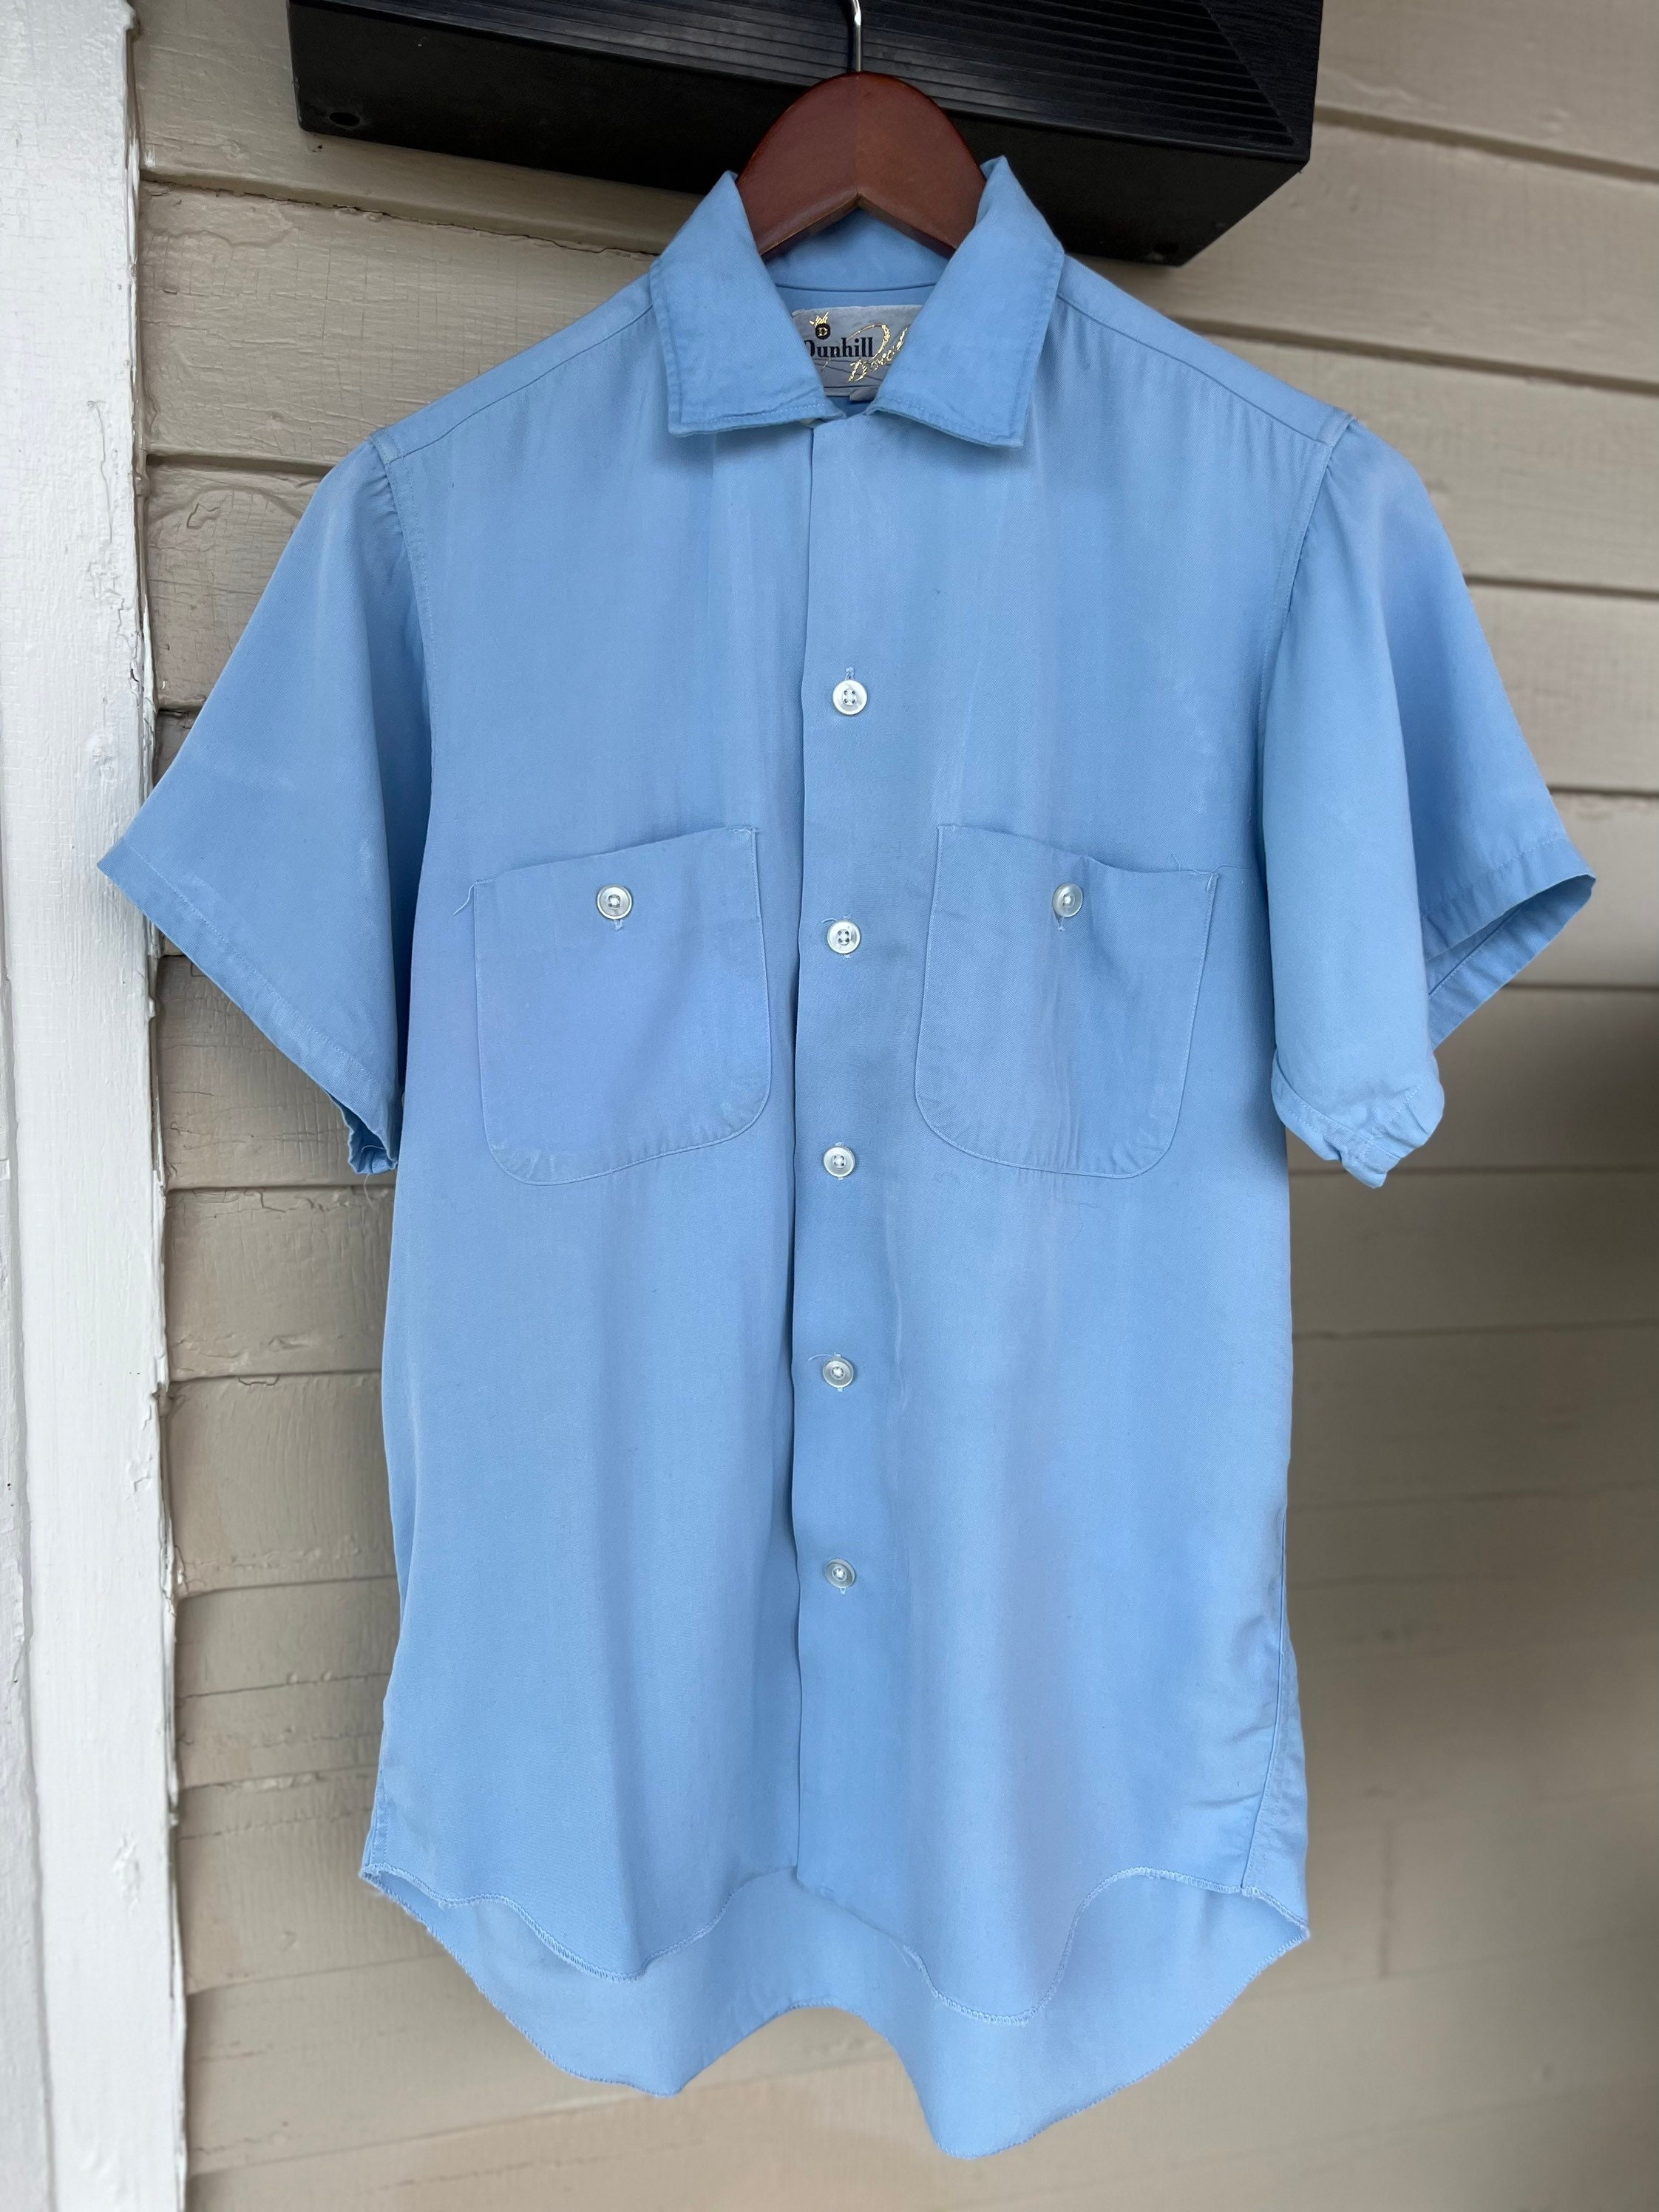 90s vintage dunhill dress shirts - シャツ